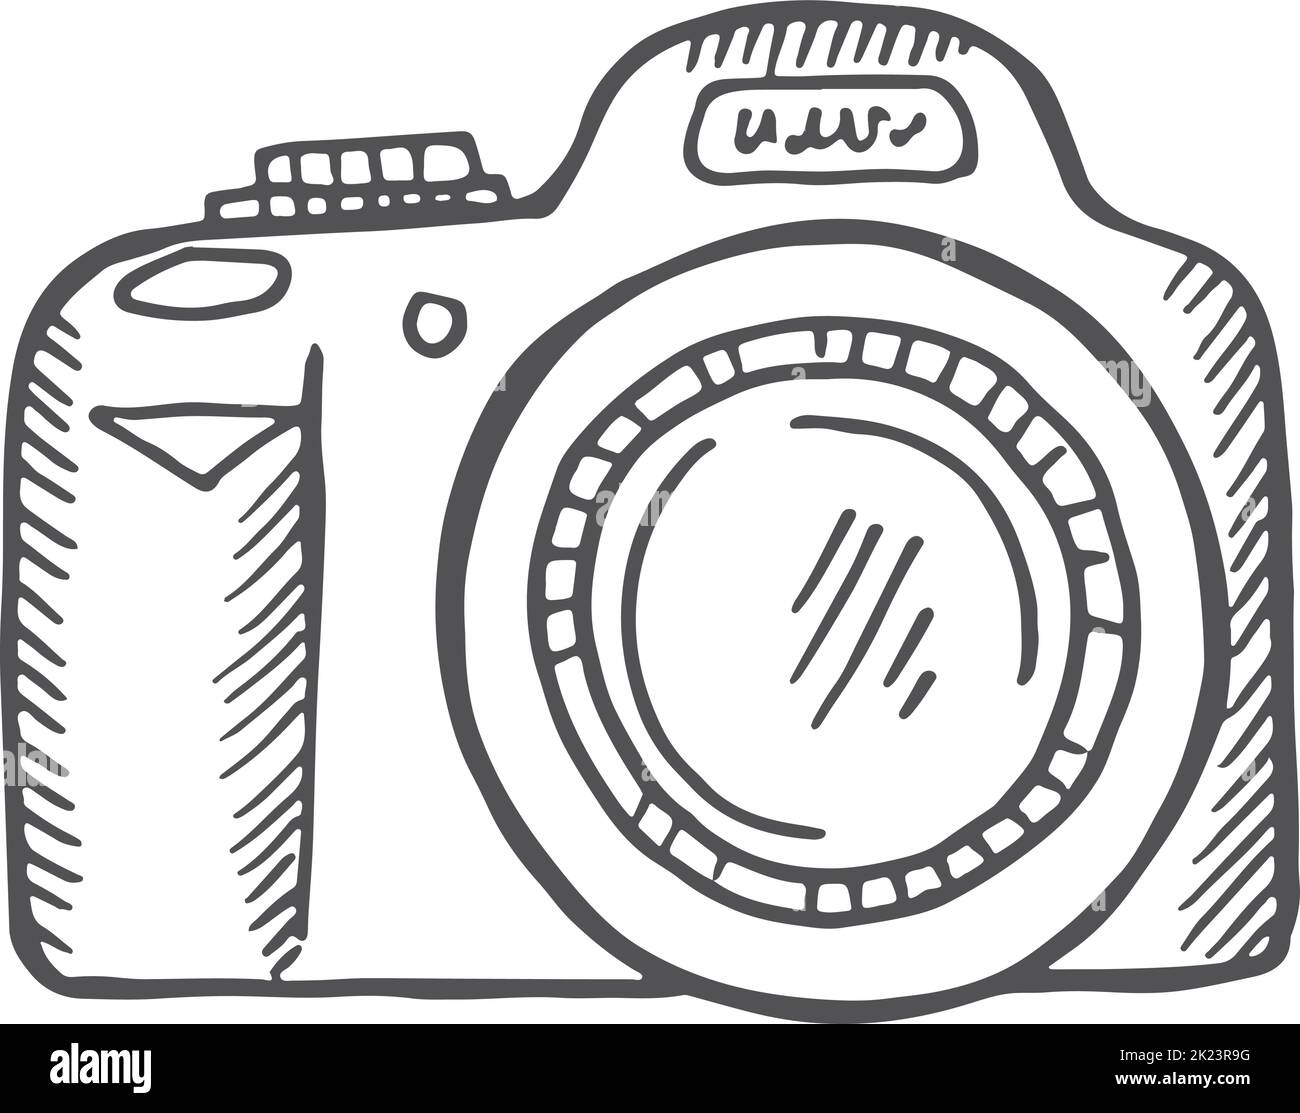 Photo camera icon. Hand drawn shooting phtography tool Stock Vector